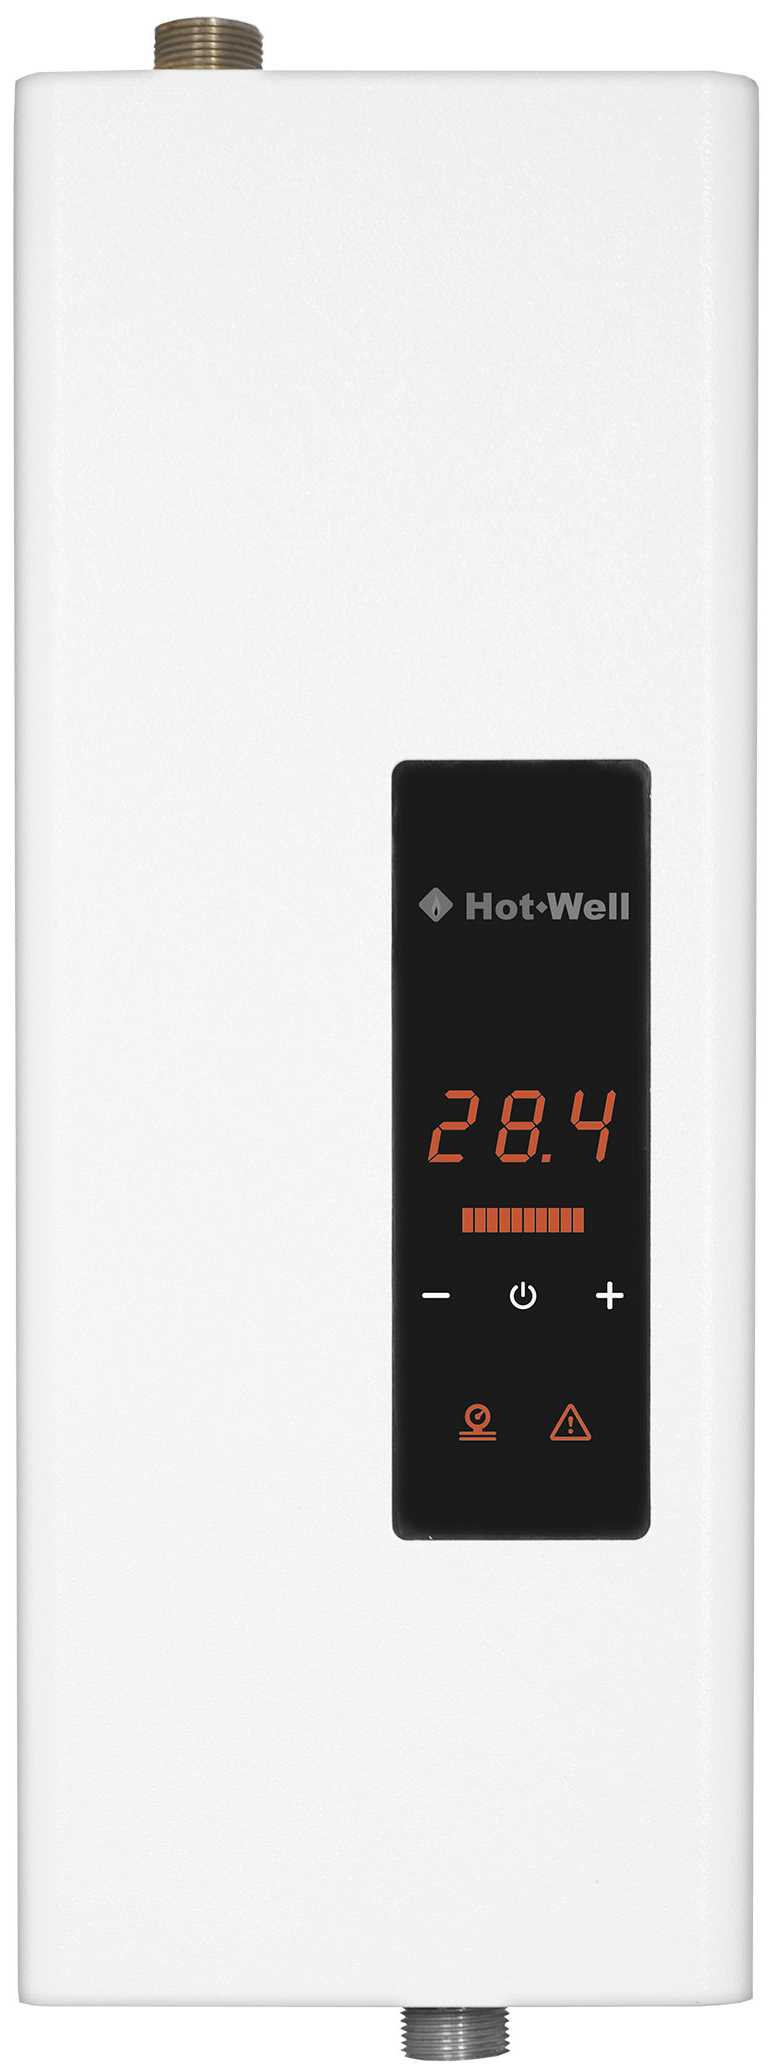 Электрический котел Hot-Well Elektra LUX S 4,5/220 цена 0.00 грн - фотография 2